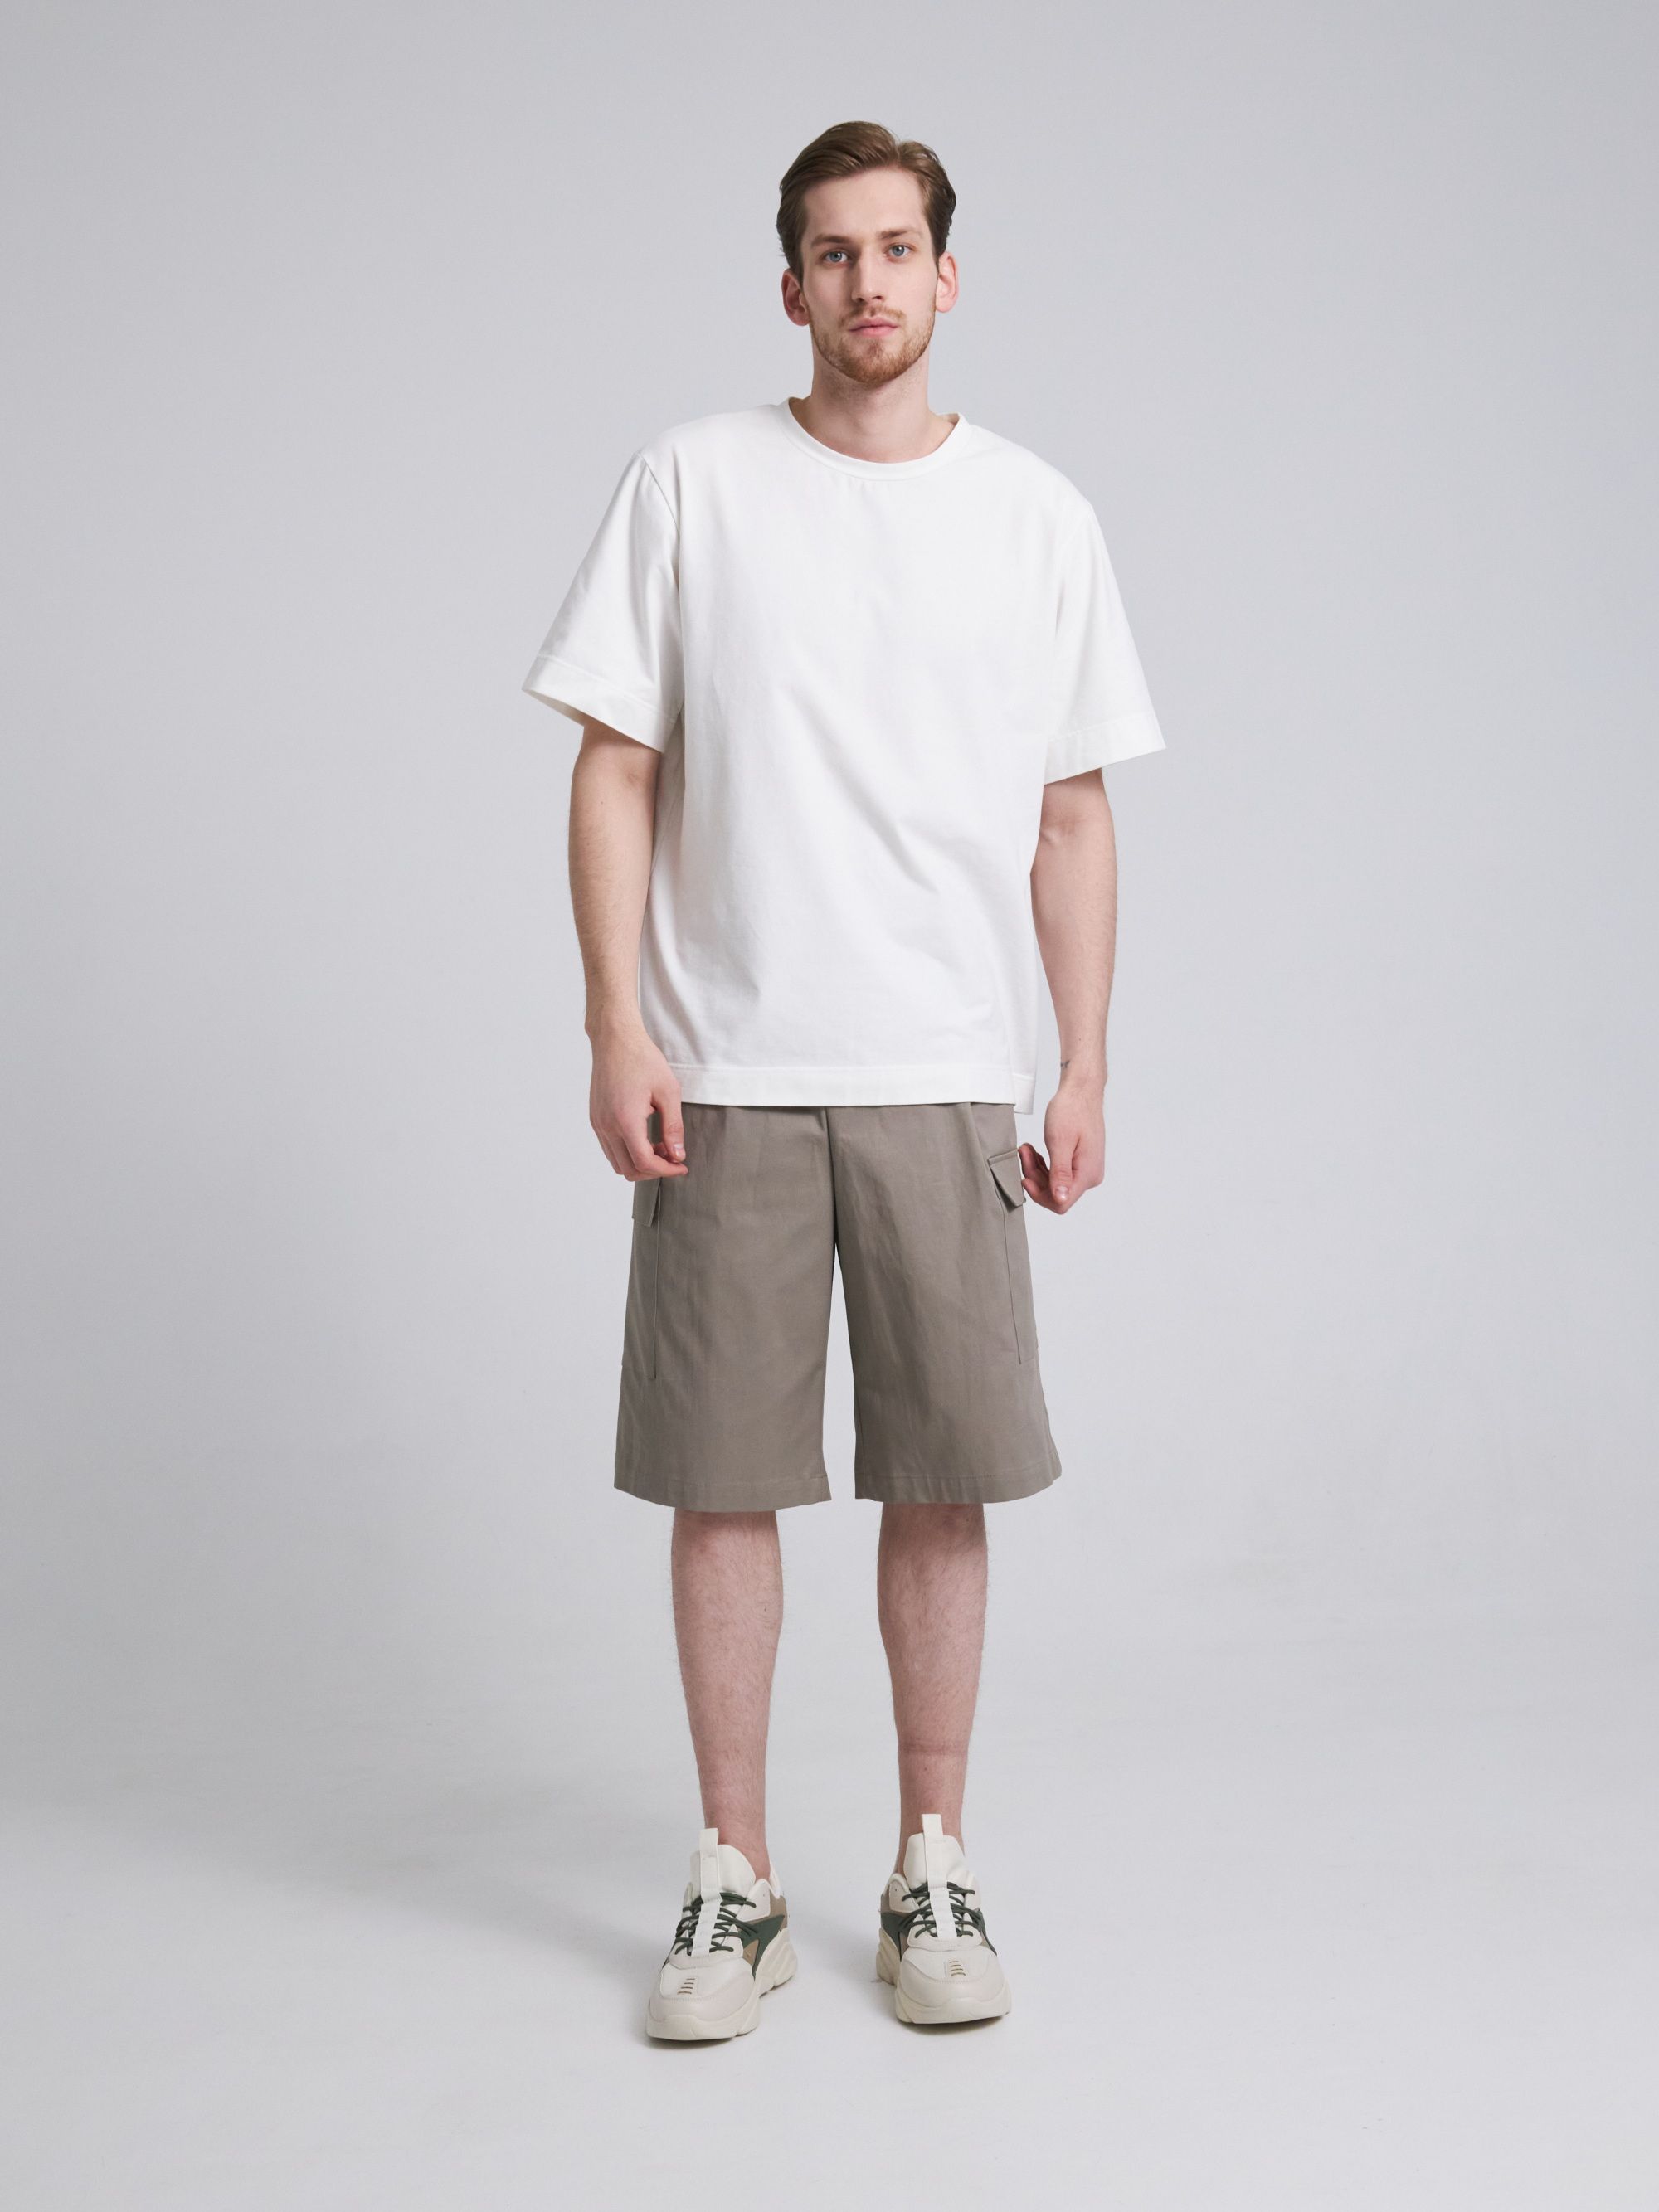 Men's shorts, pattern №1035 buy on-line